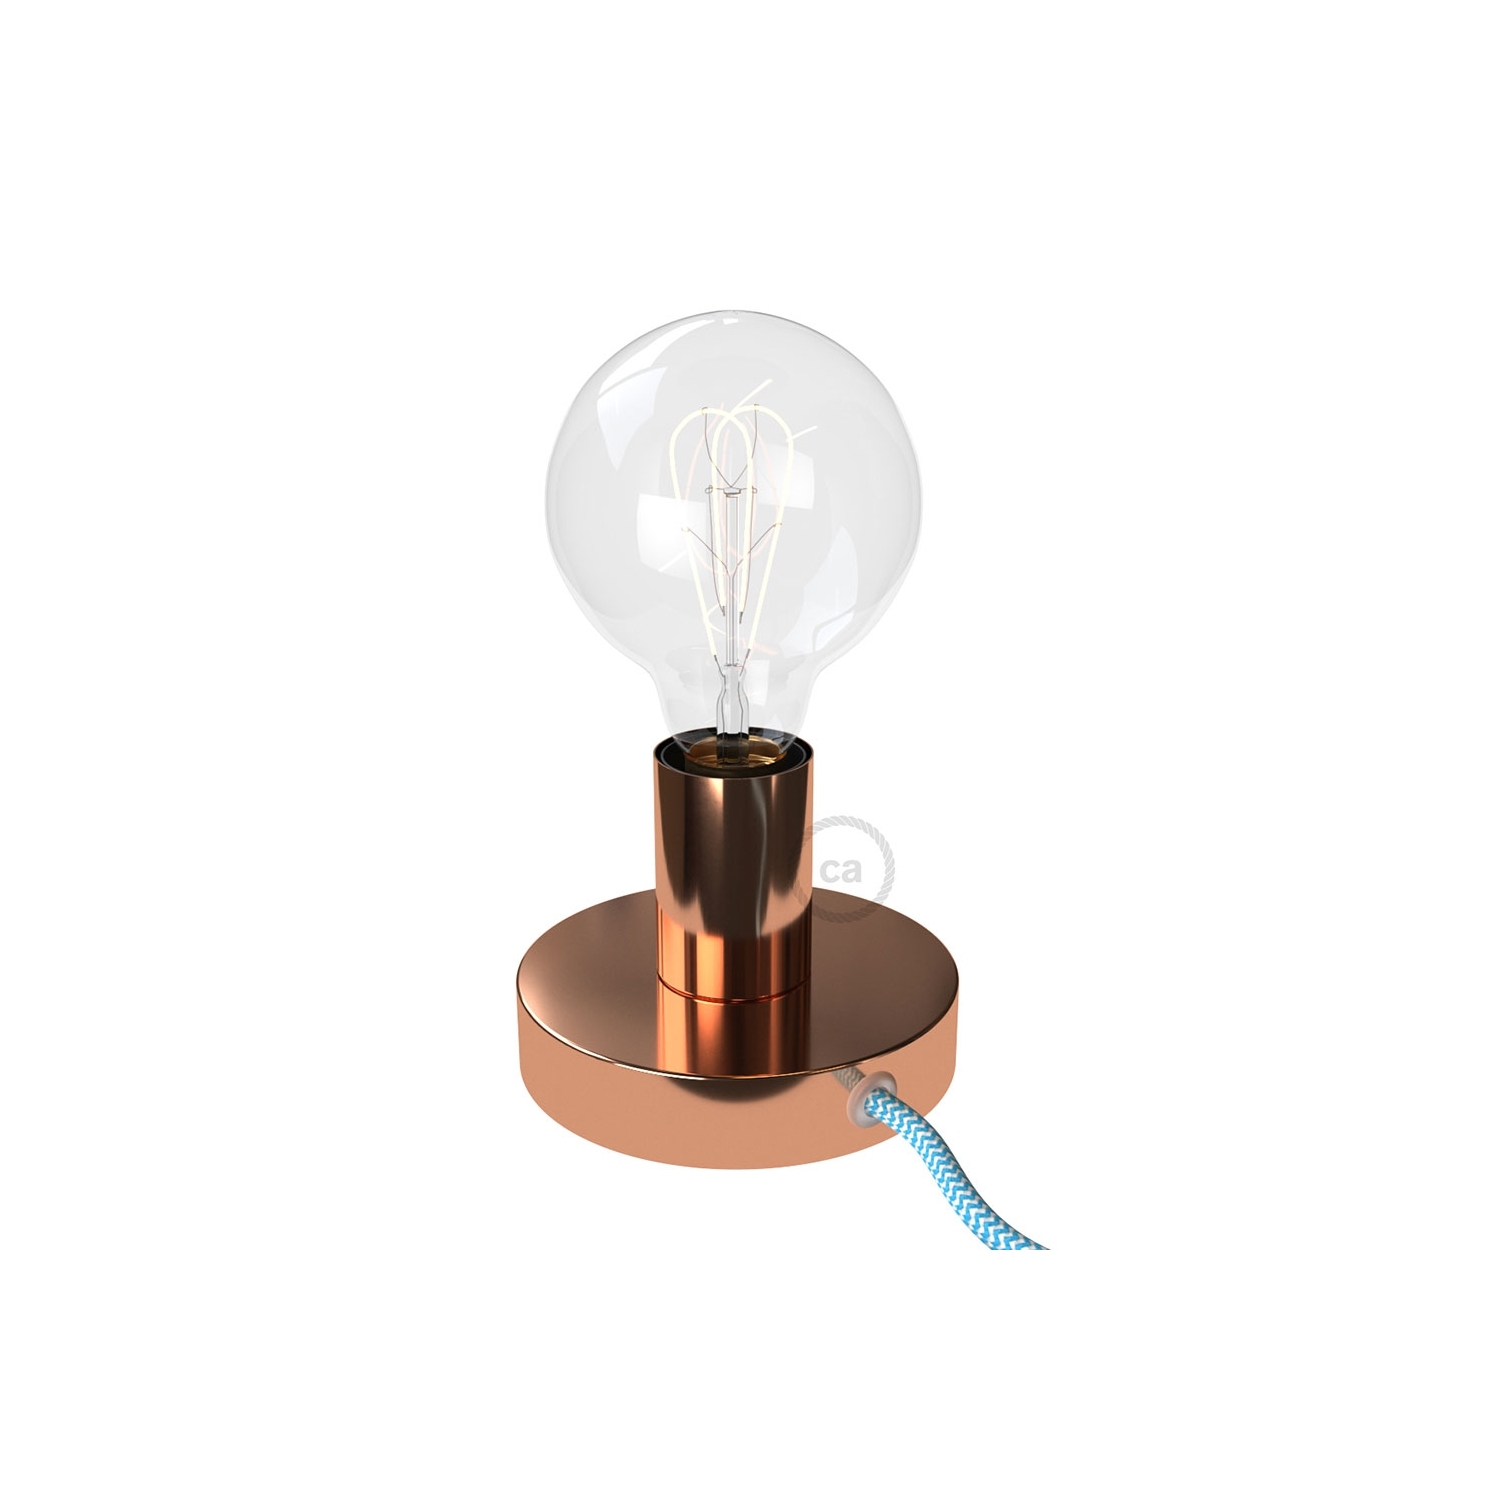 The Posaluce | Copper Metal Table Lamp